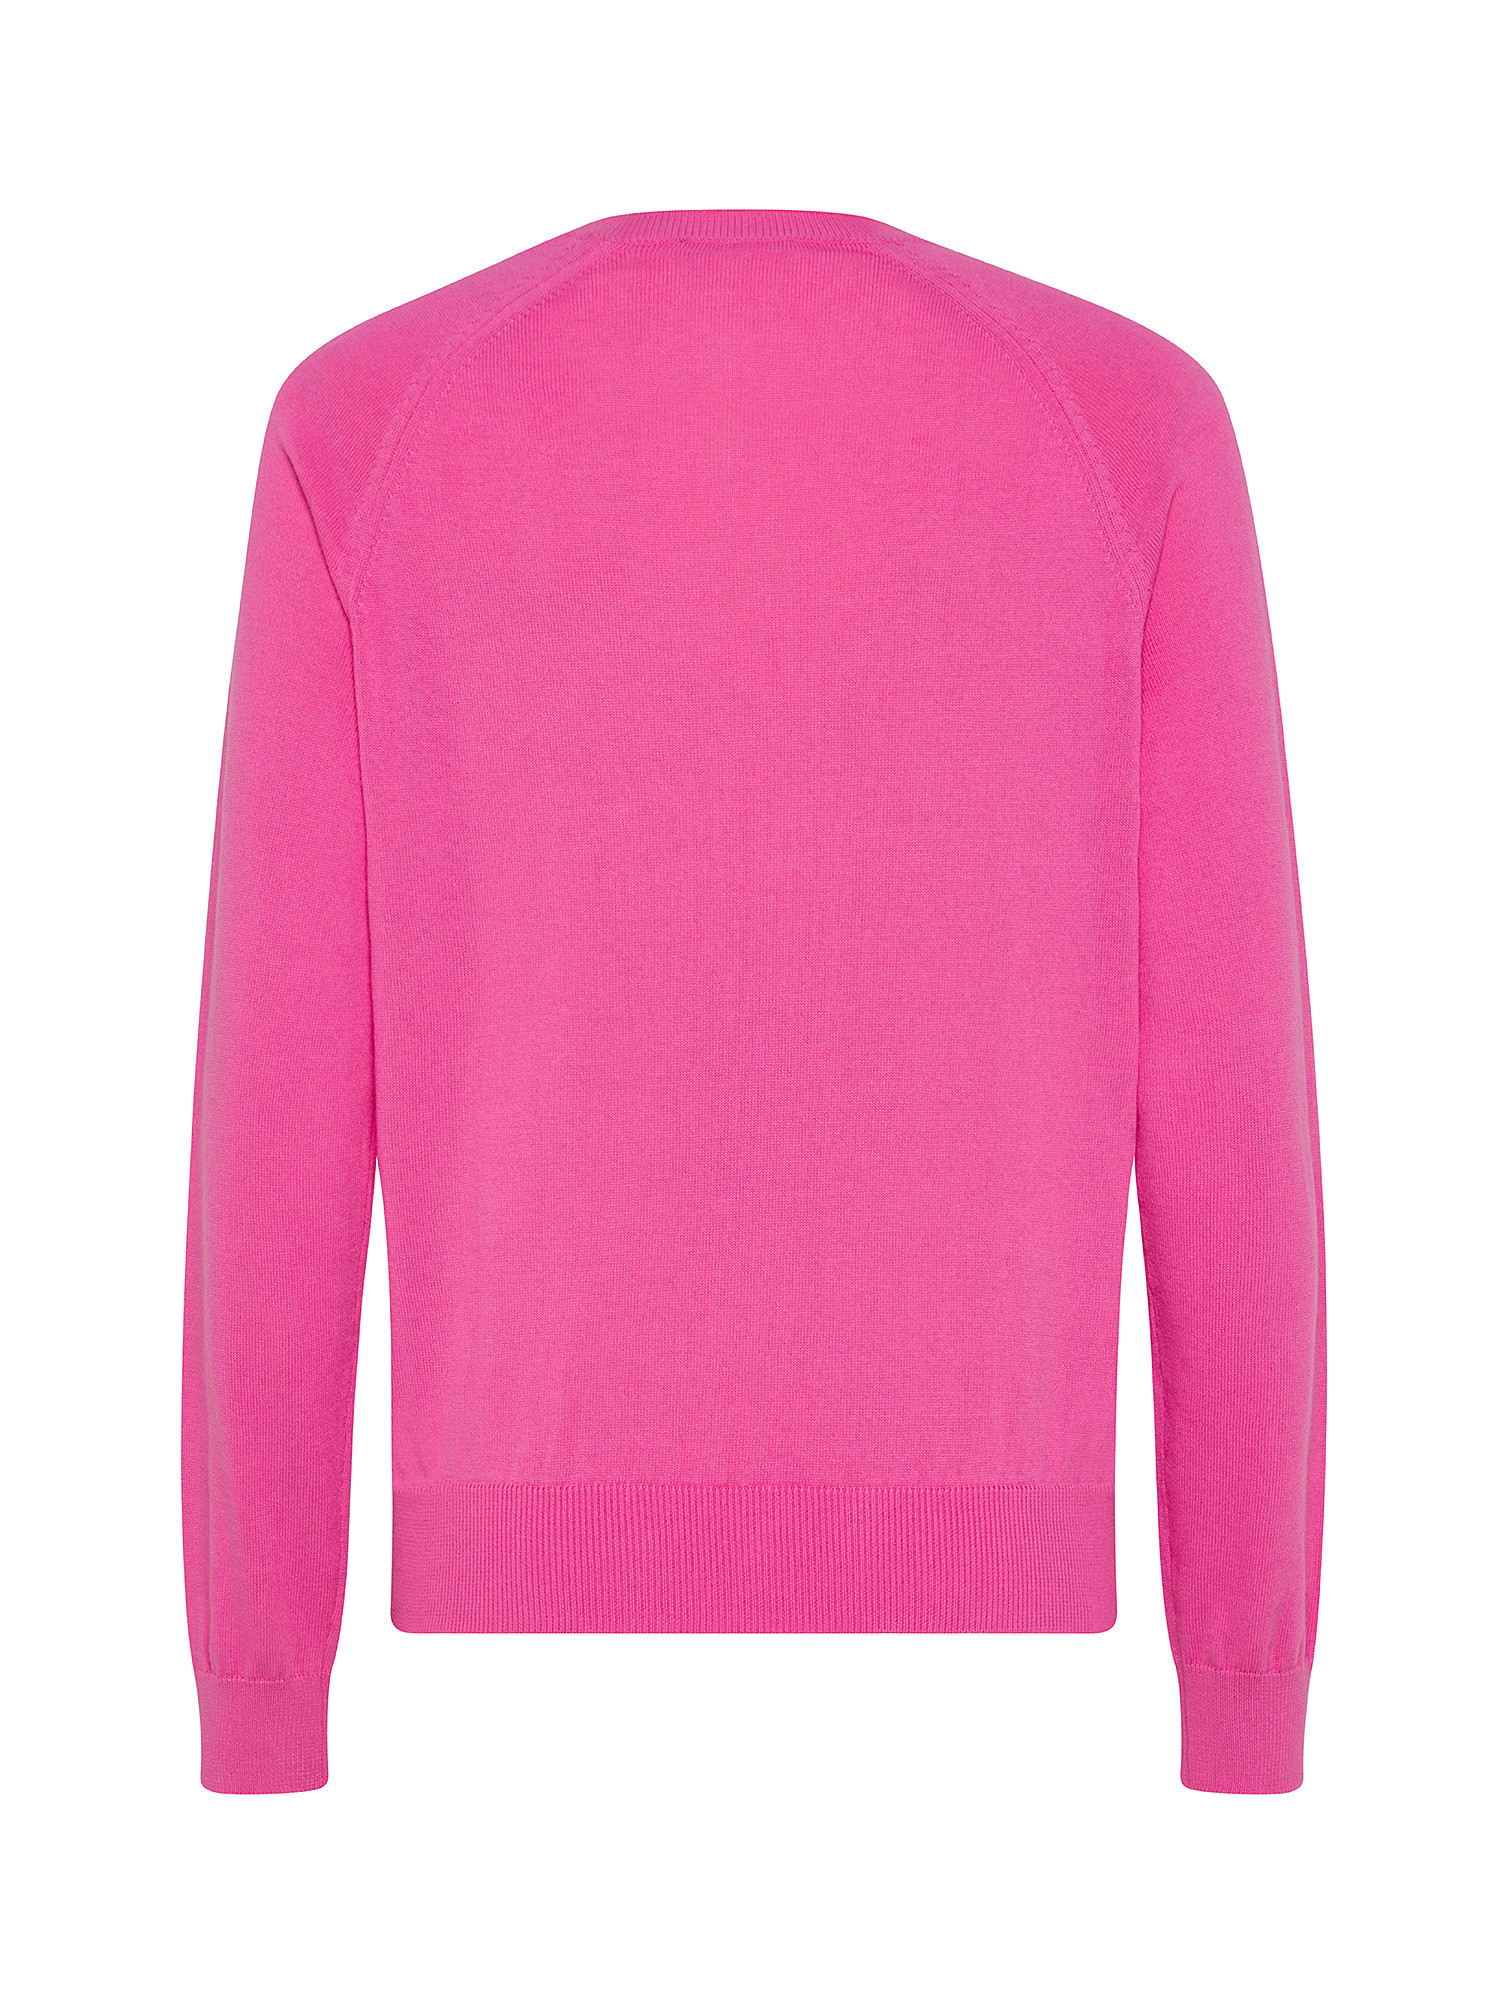 Emporio Armani - Cotton sweater with eagle logo, Pink Fuchsia, large image number 1